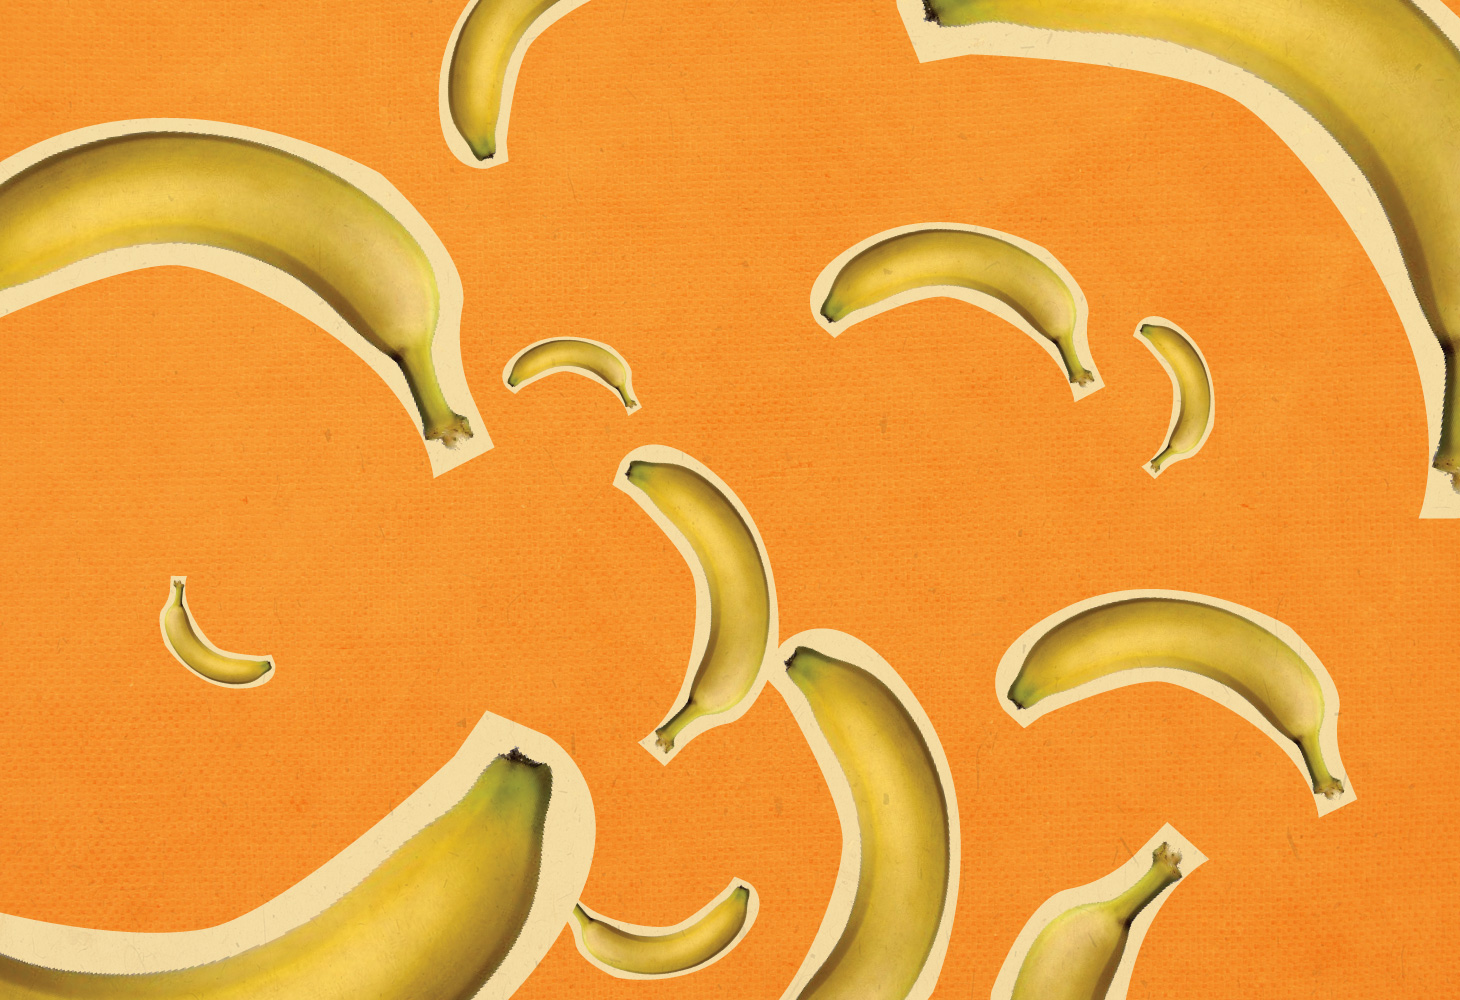 Fruit Salad - Illustrations - Bananas